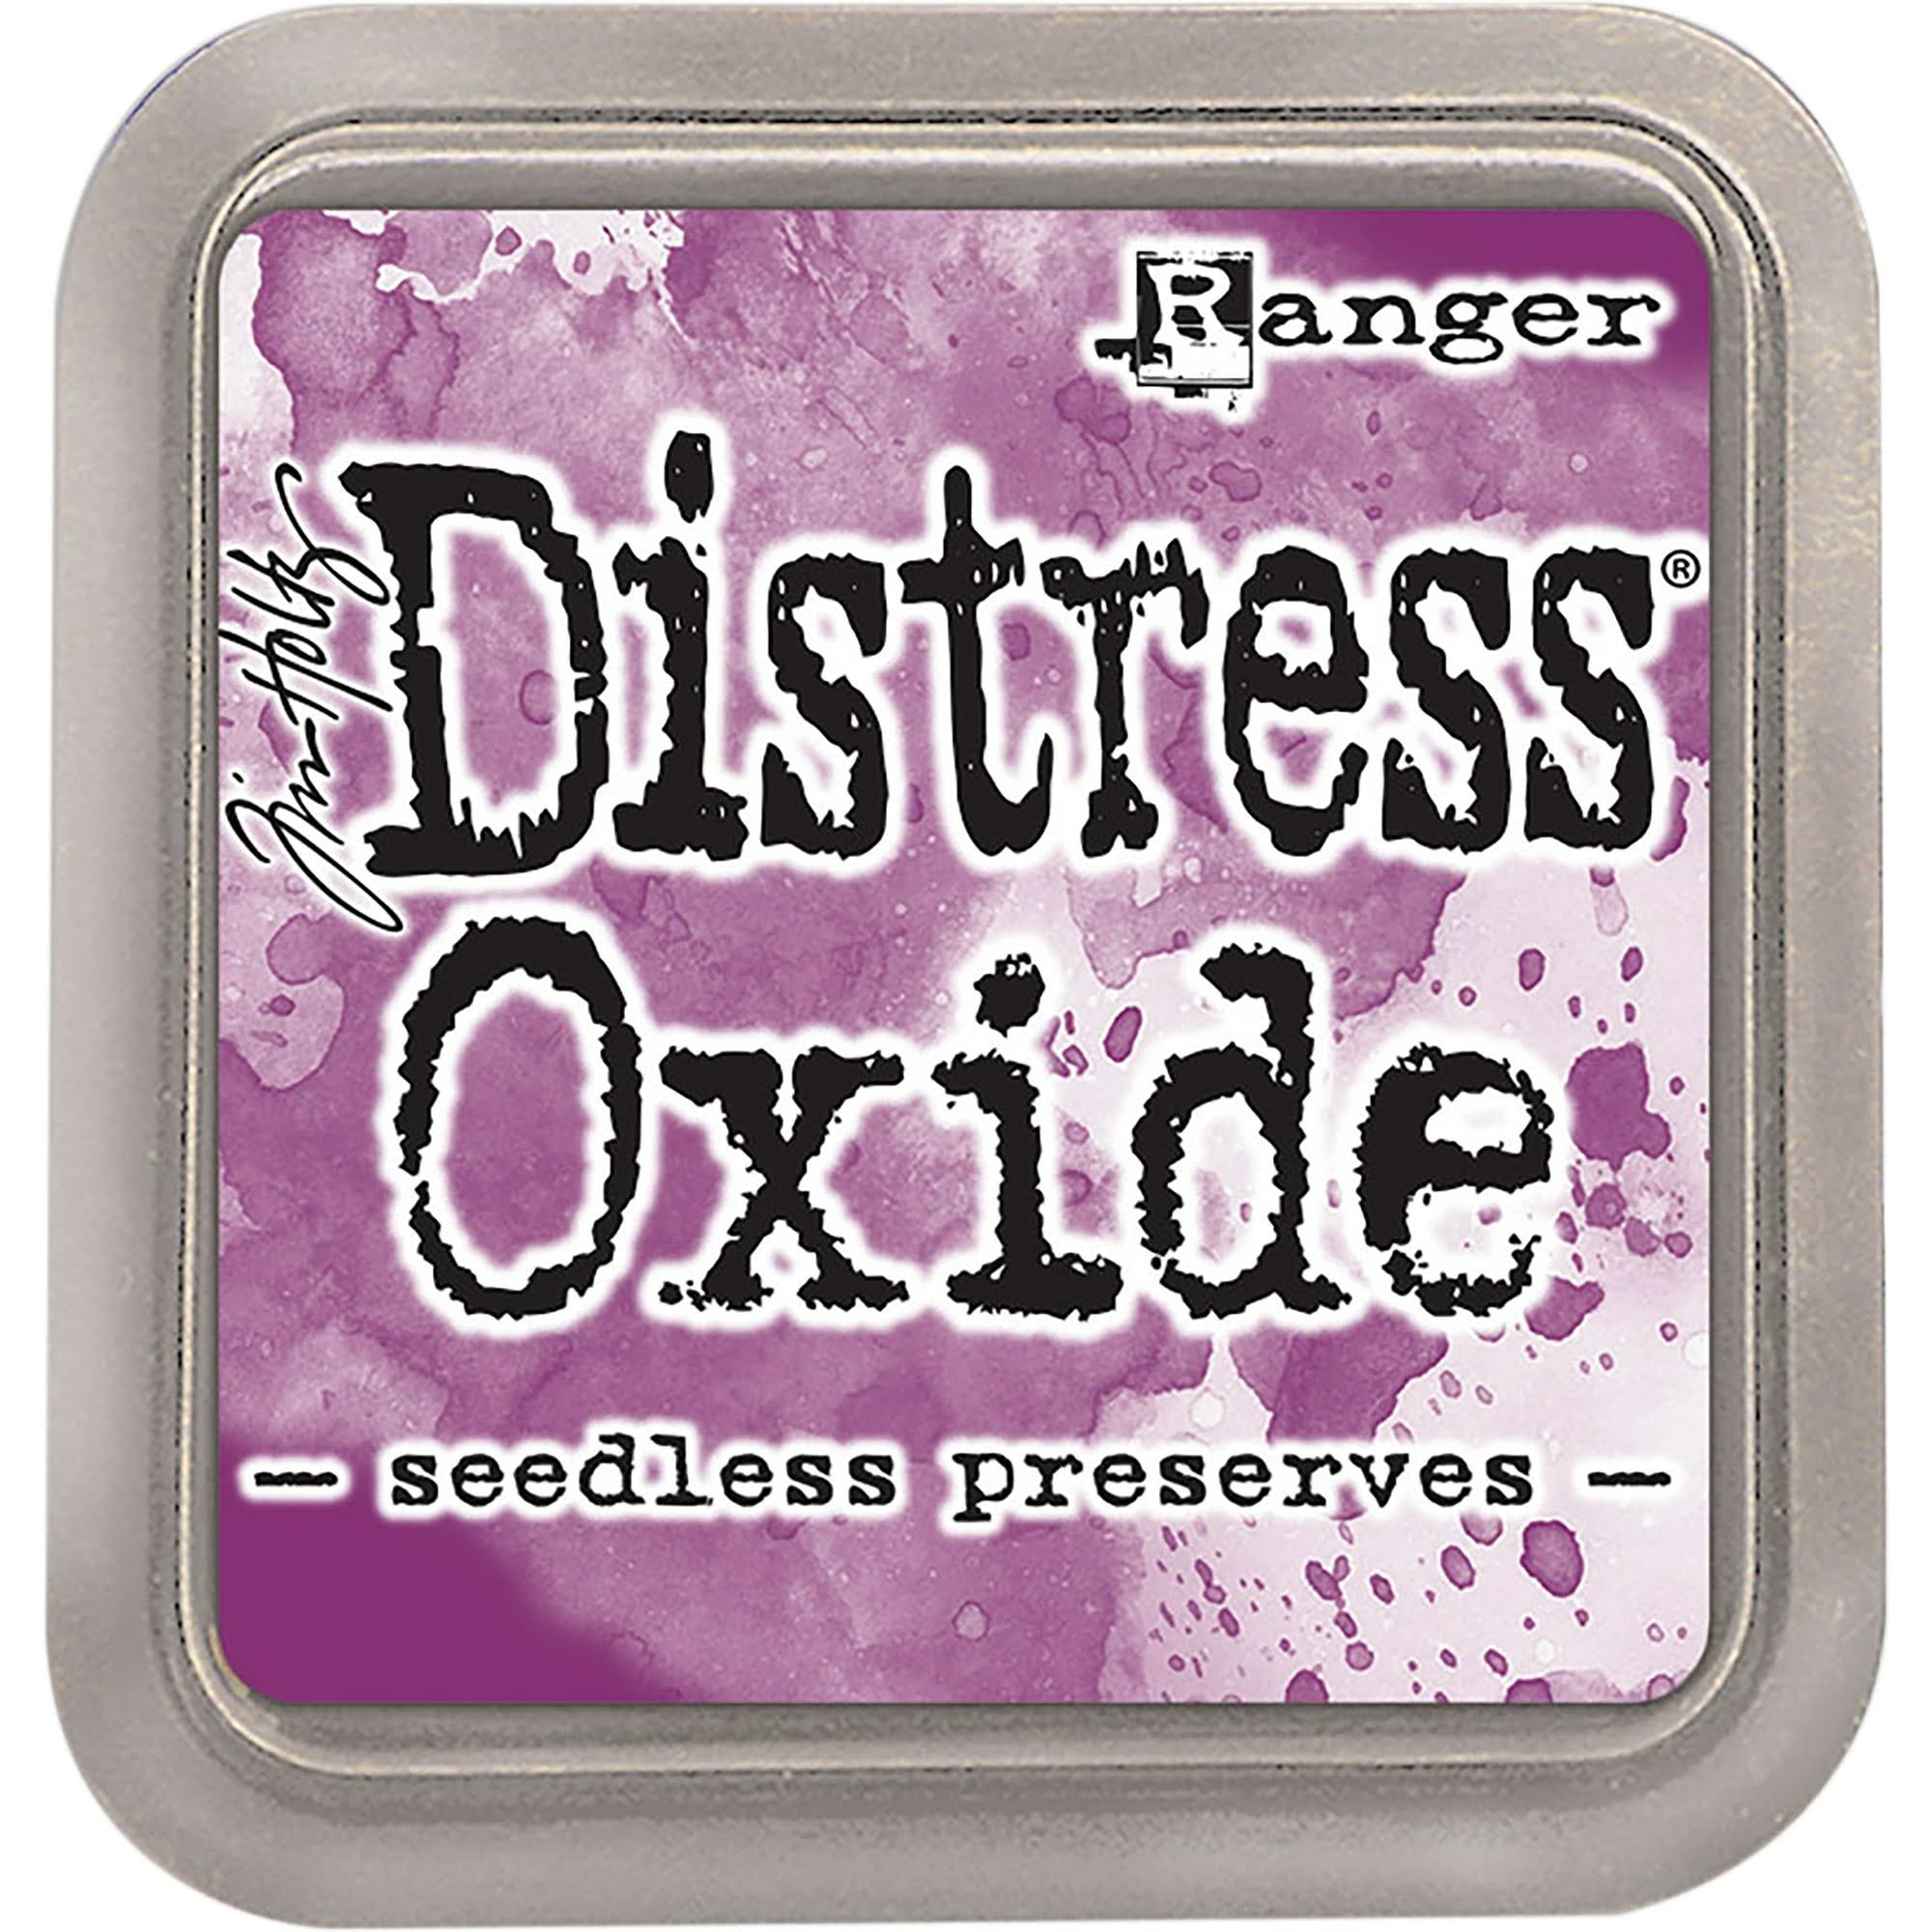 Tim Holtz Distress Oxides Ink Pad - Seedless Preserves